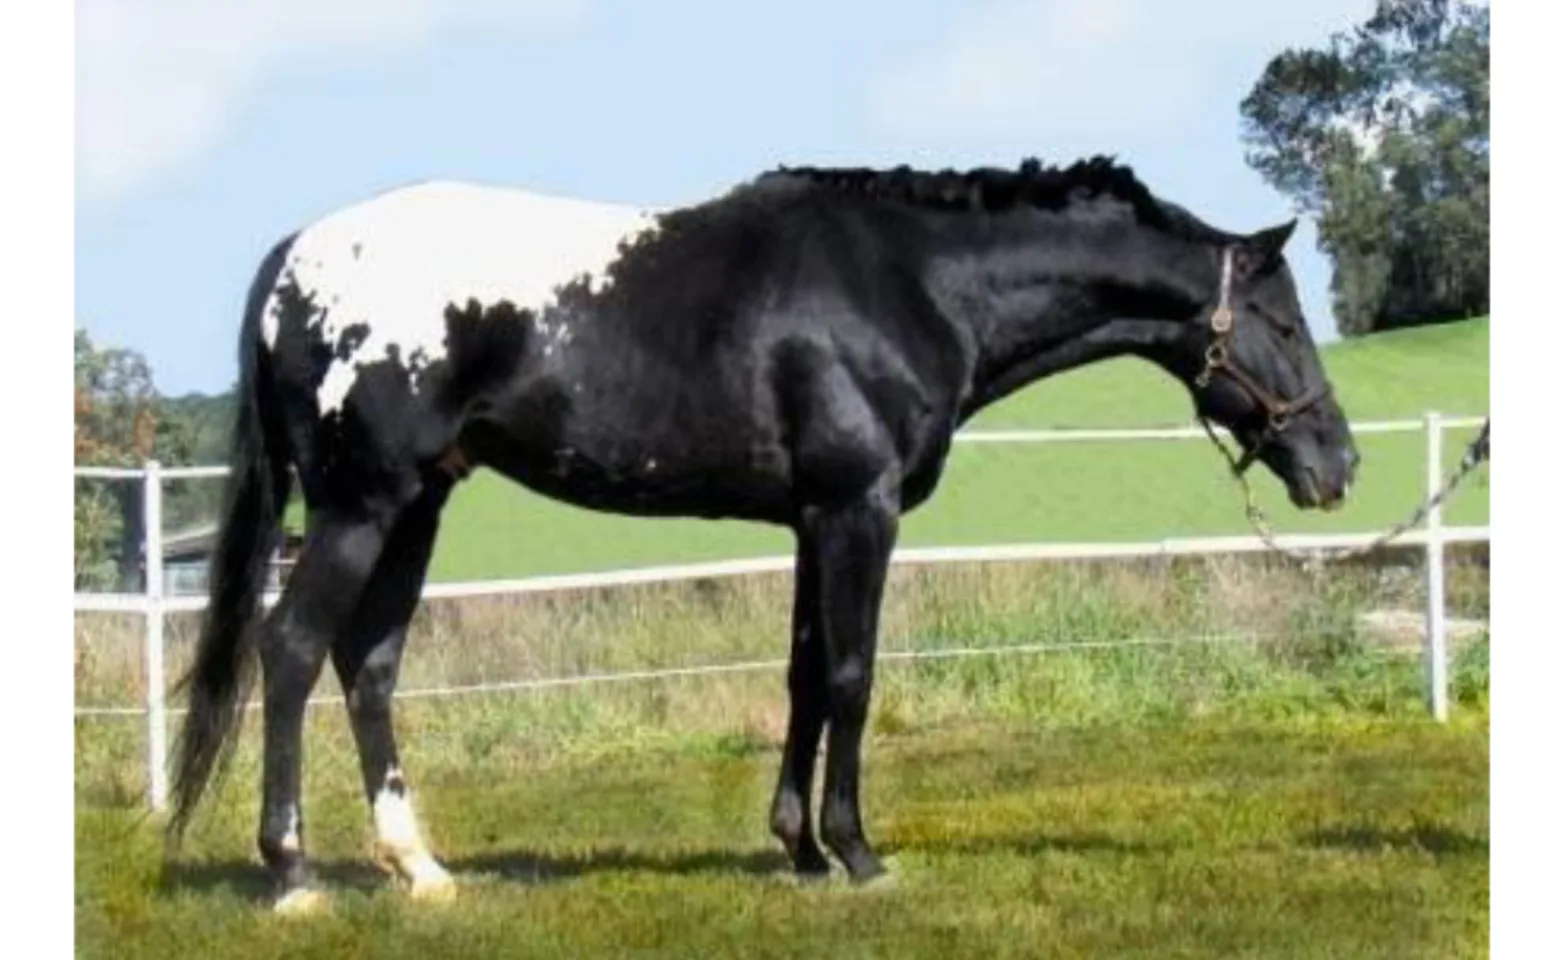 Wapuzzan, a black and white horse